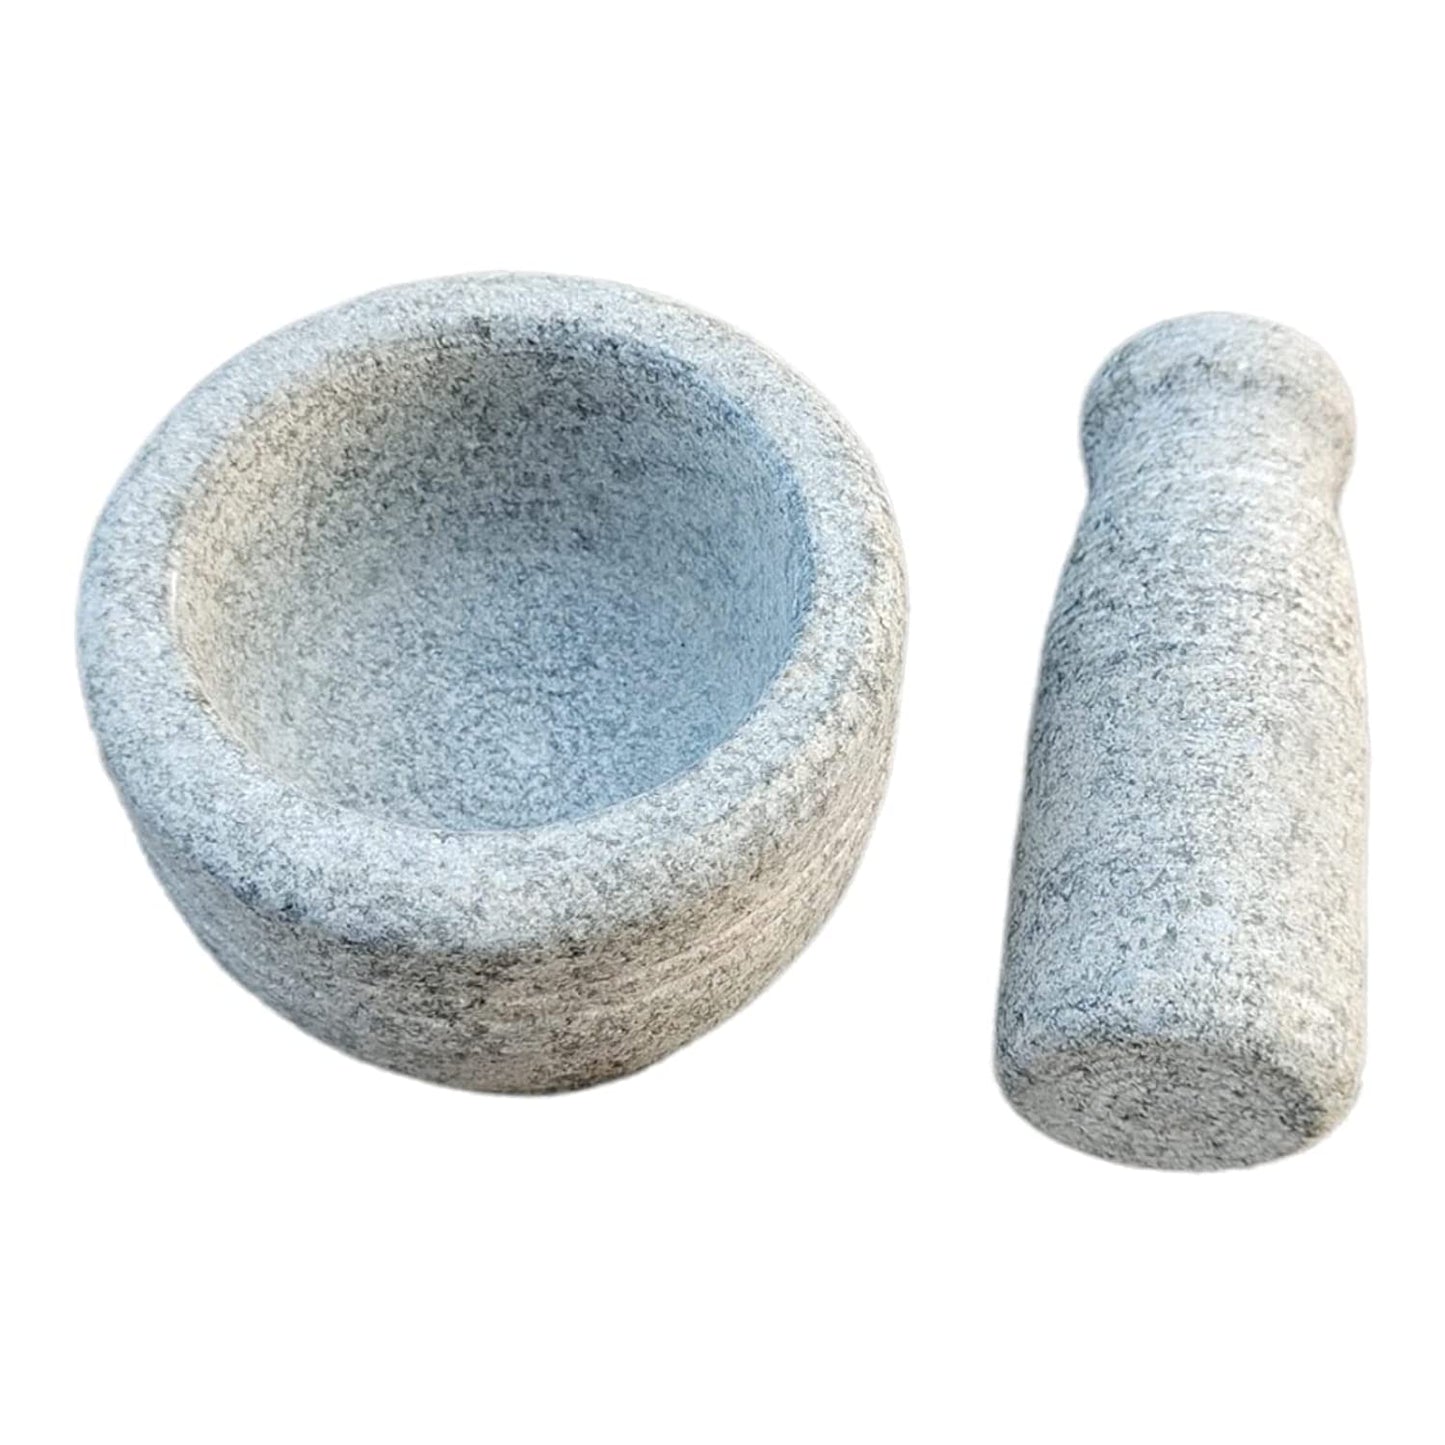 EZAHK Stone Pestle and Mortar Set, Okhli, Khalbatta, Kharal, Mixer, Natural & Traditional Grinder Musal (4 inch) Small Size